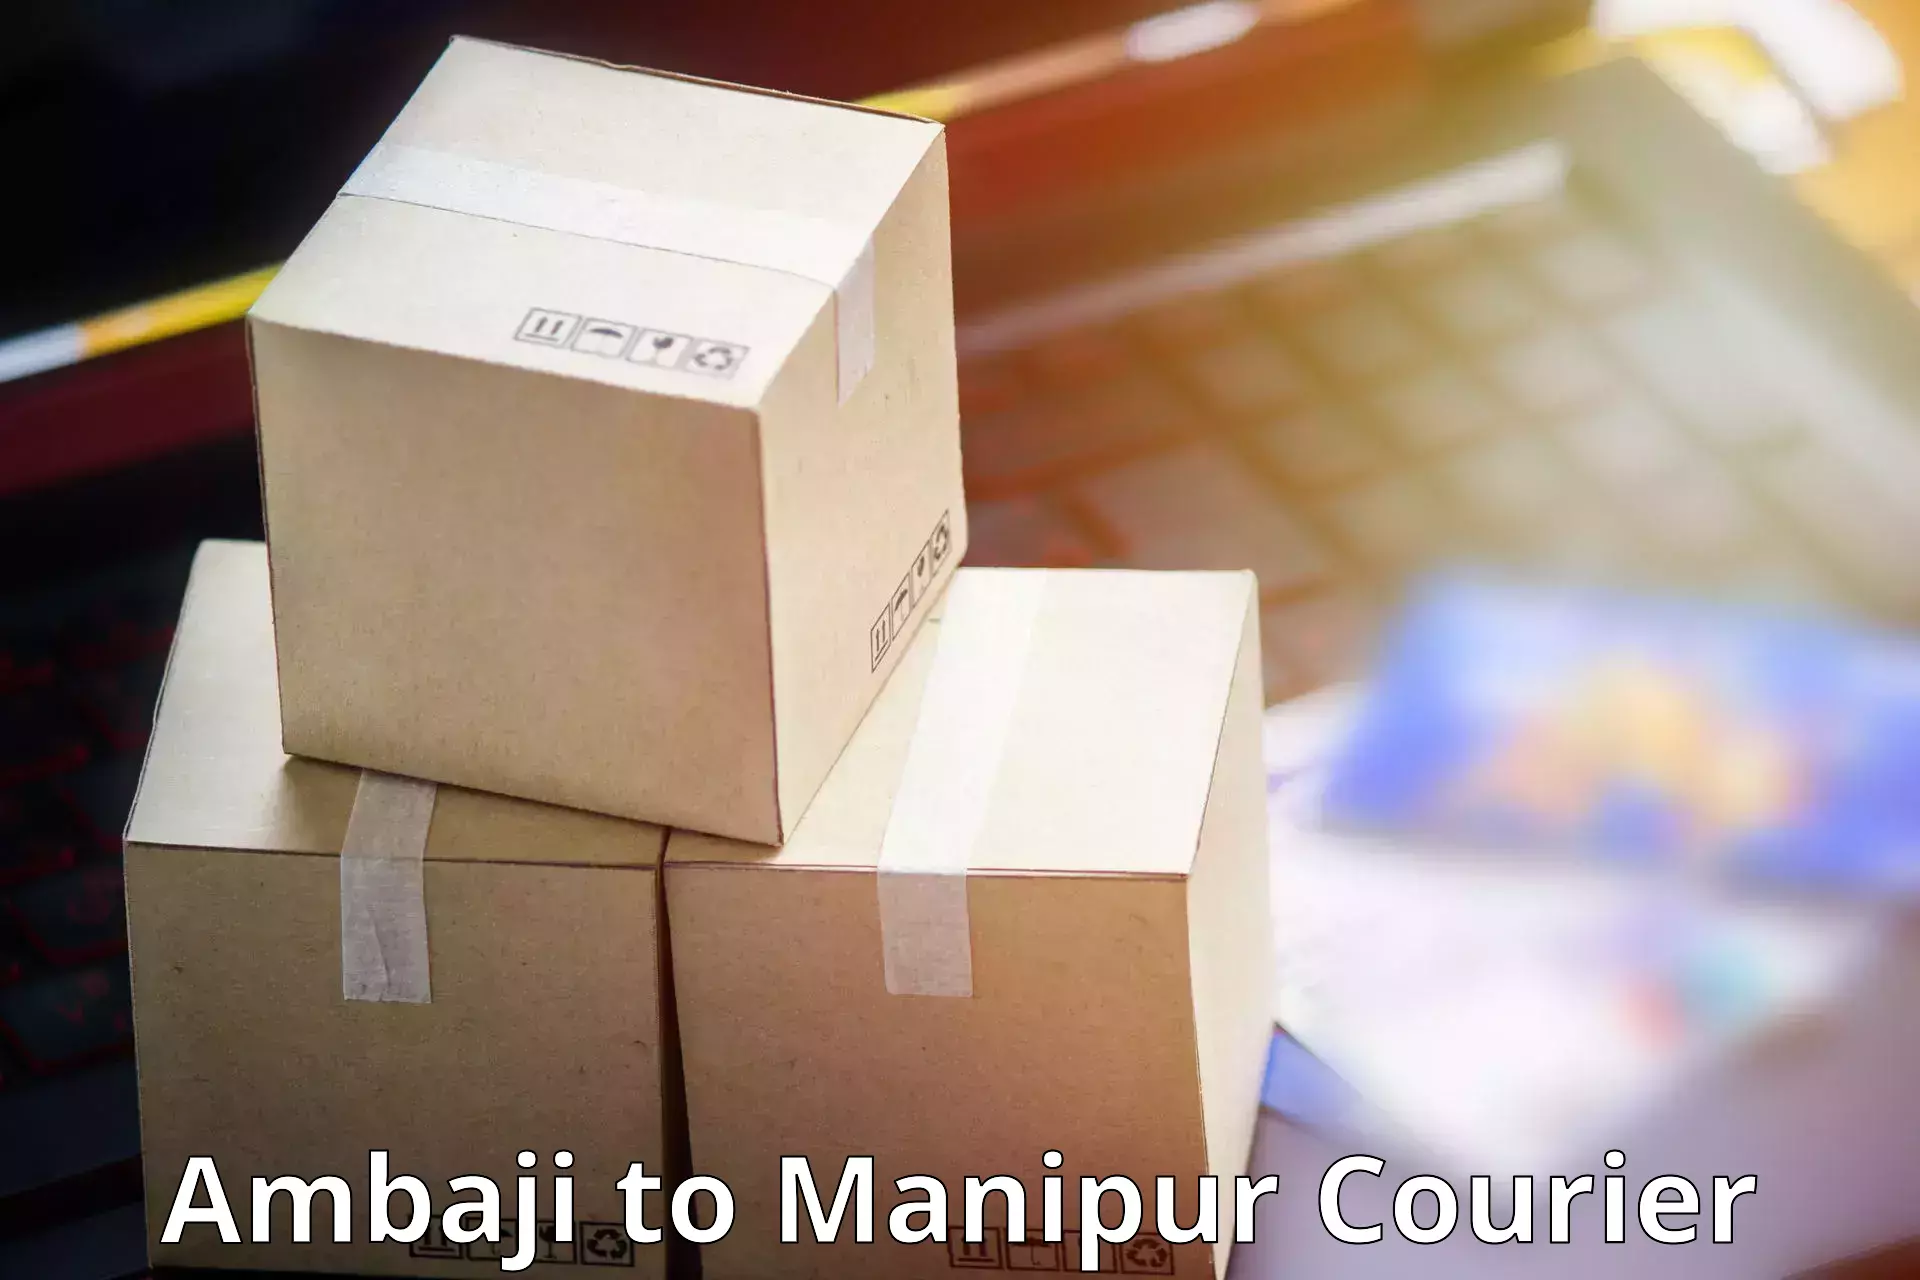 Courier service innovation Ambaji to Chandel